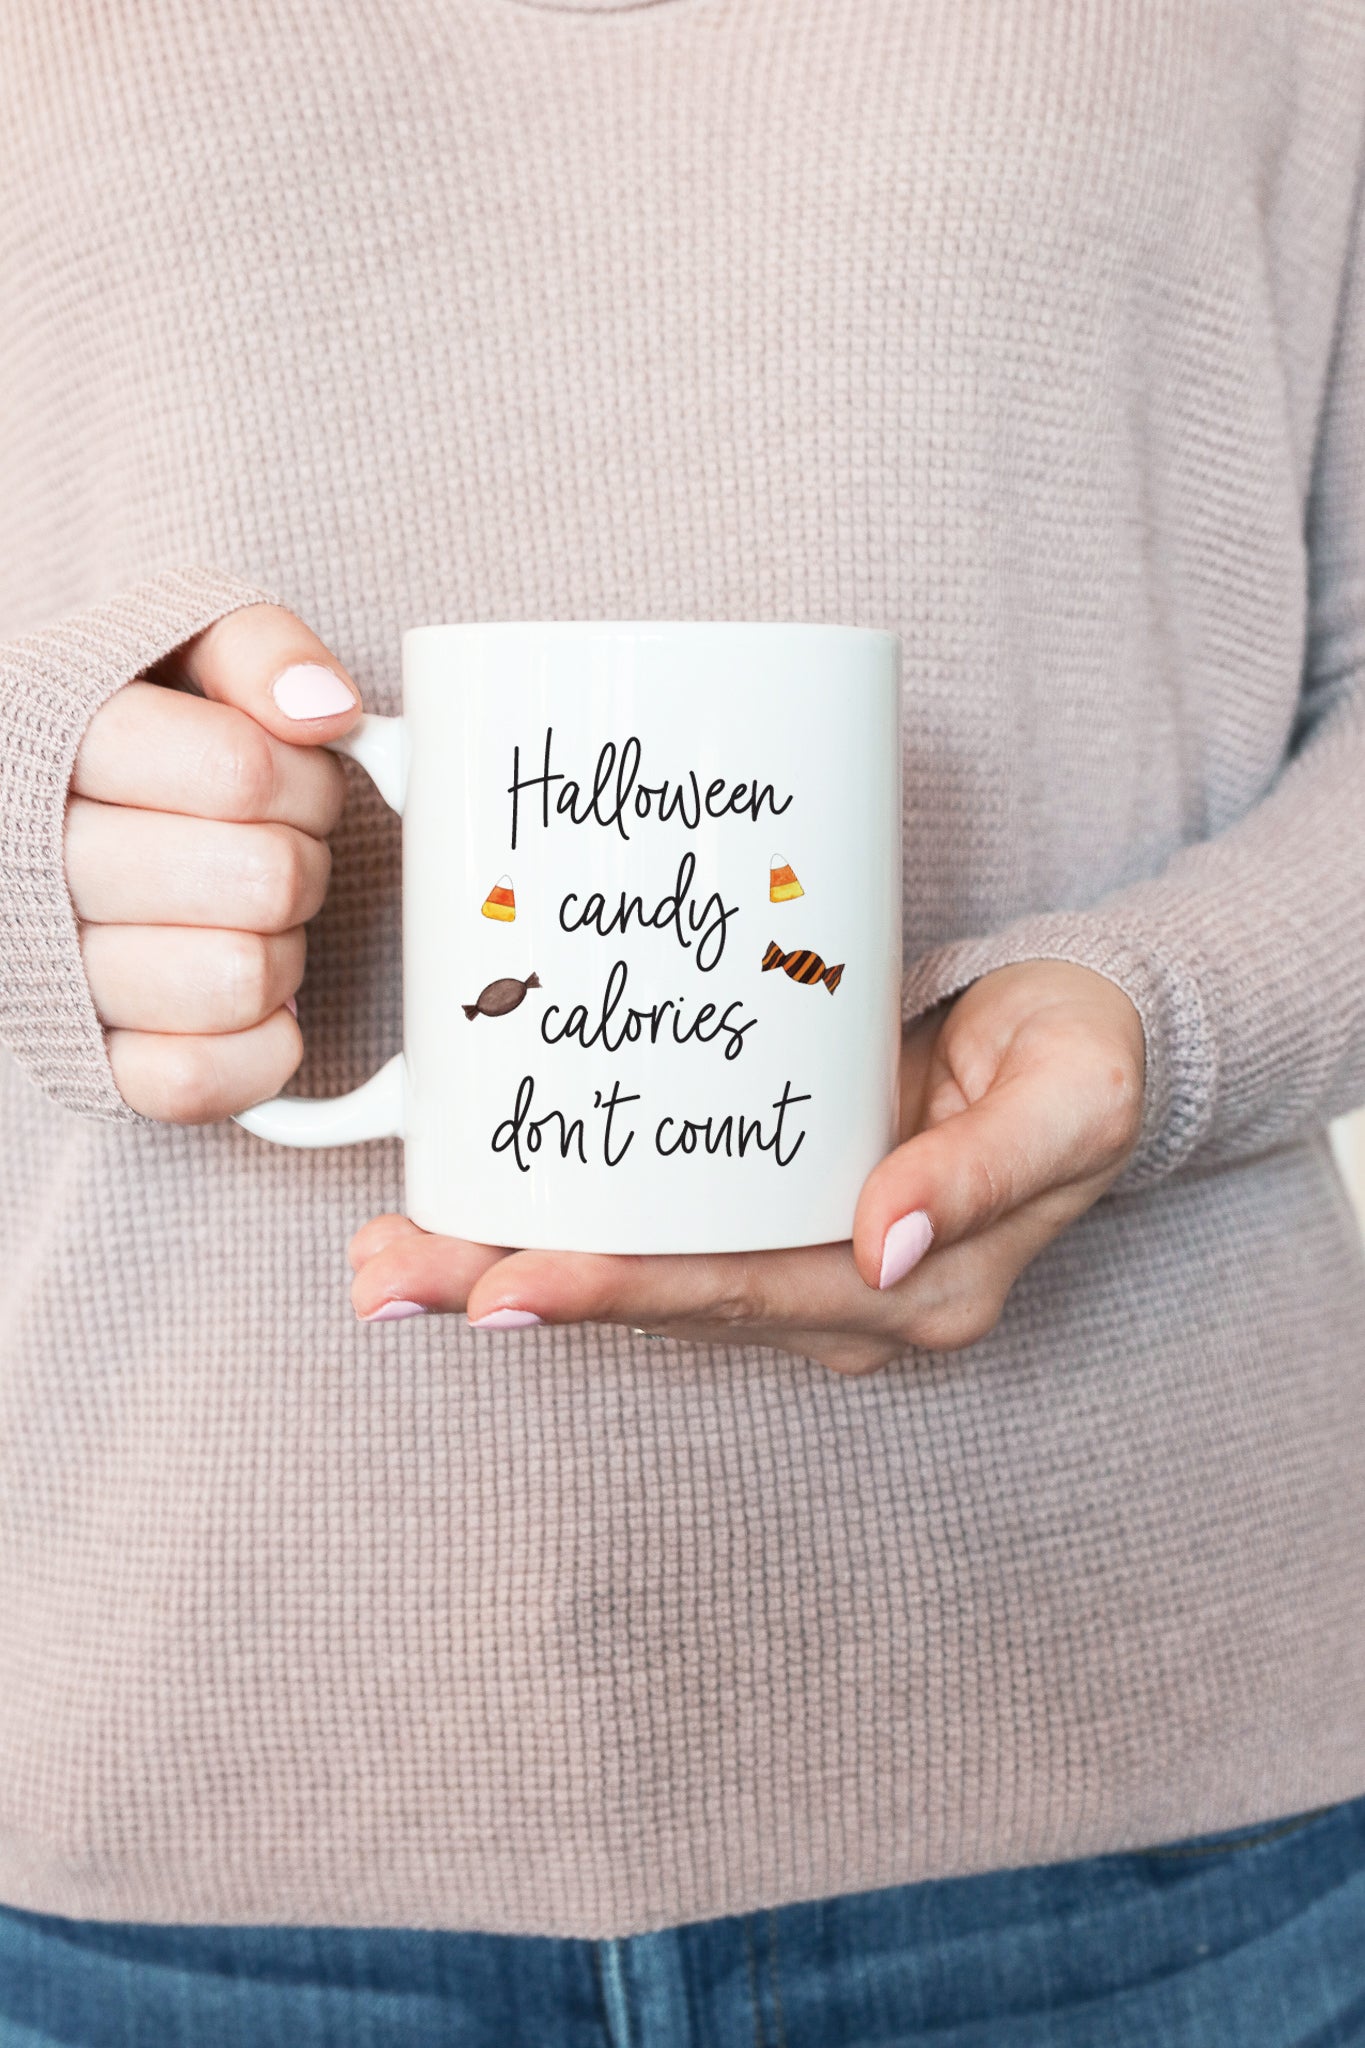 Halloween Candy Calories Don't Count Mug